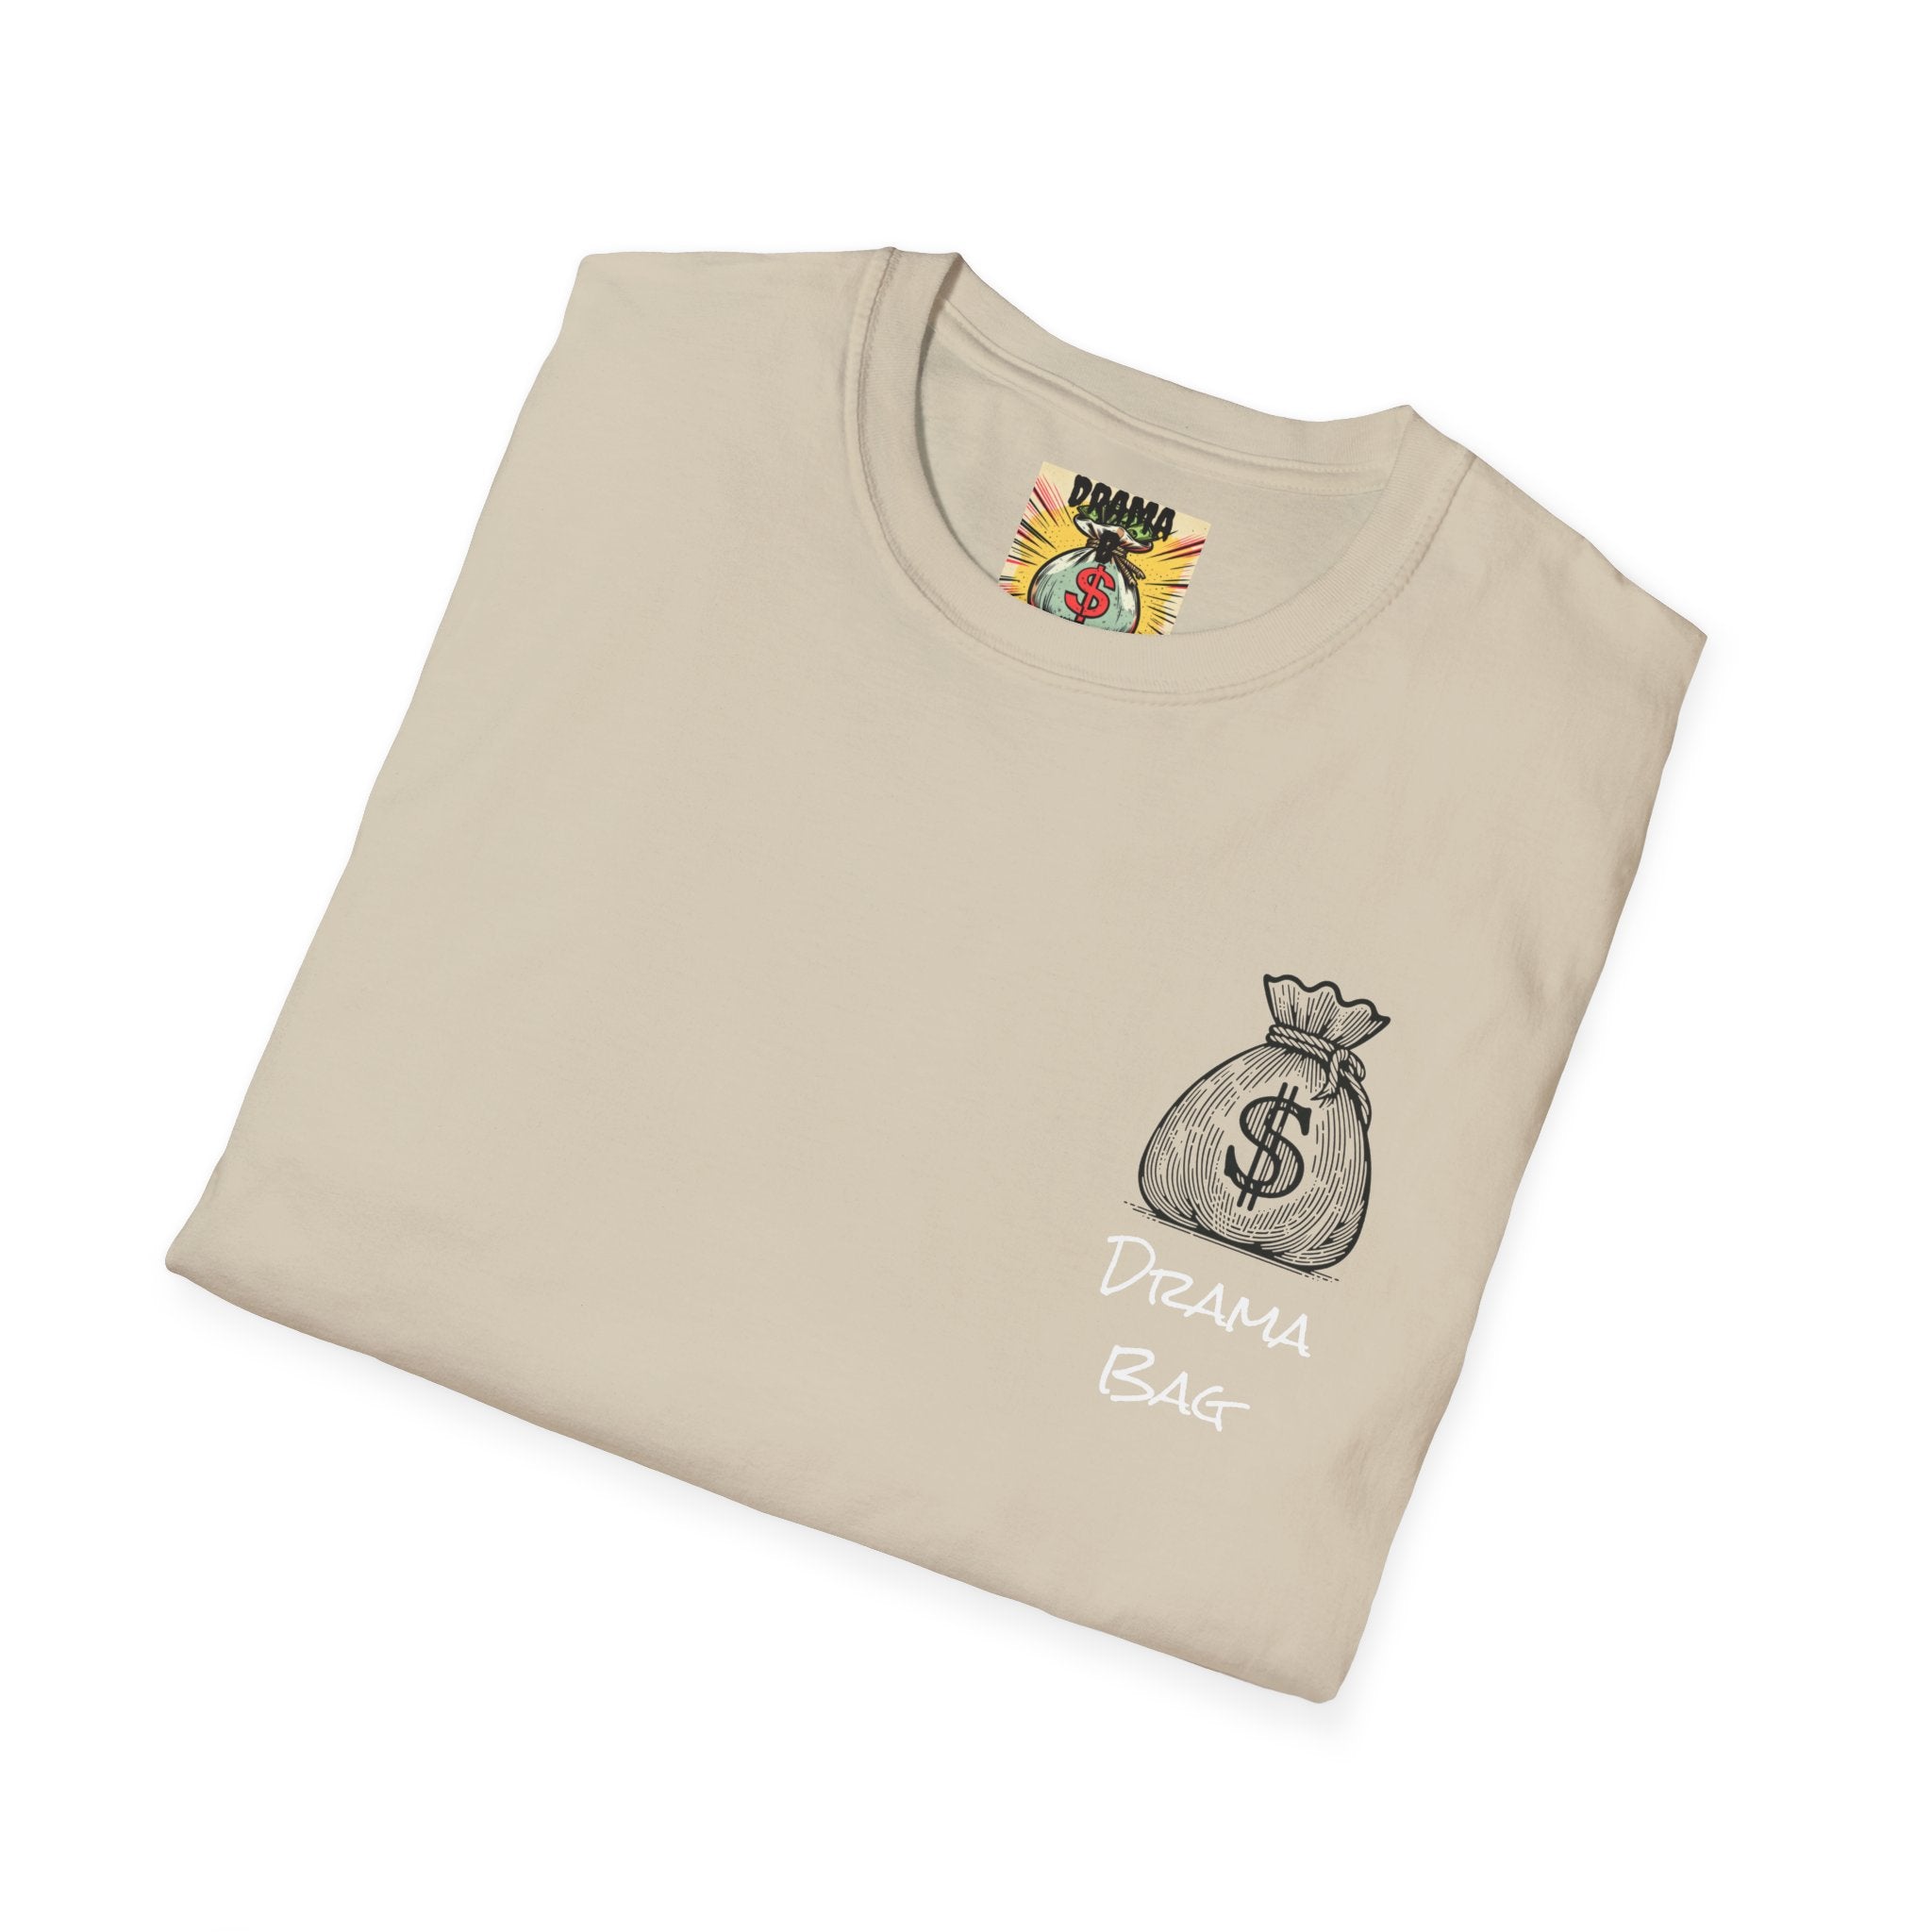 Drama Bag Pencil draw Money T-Shirt